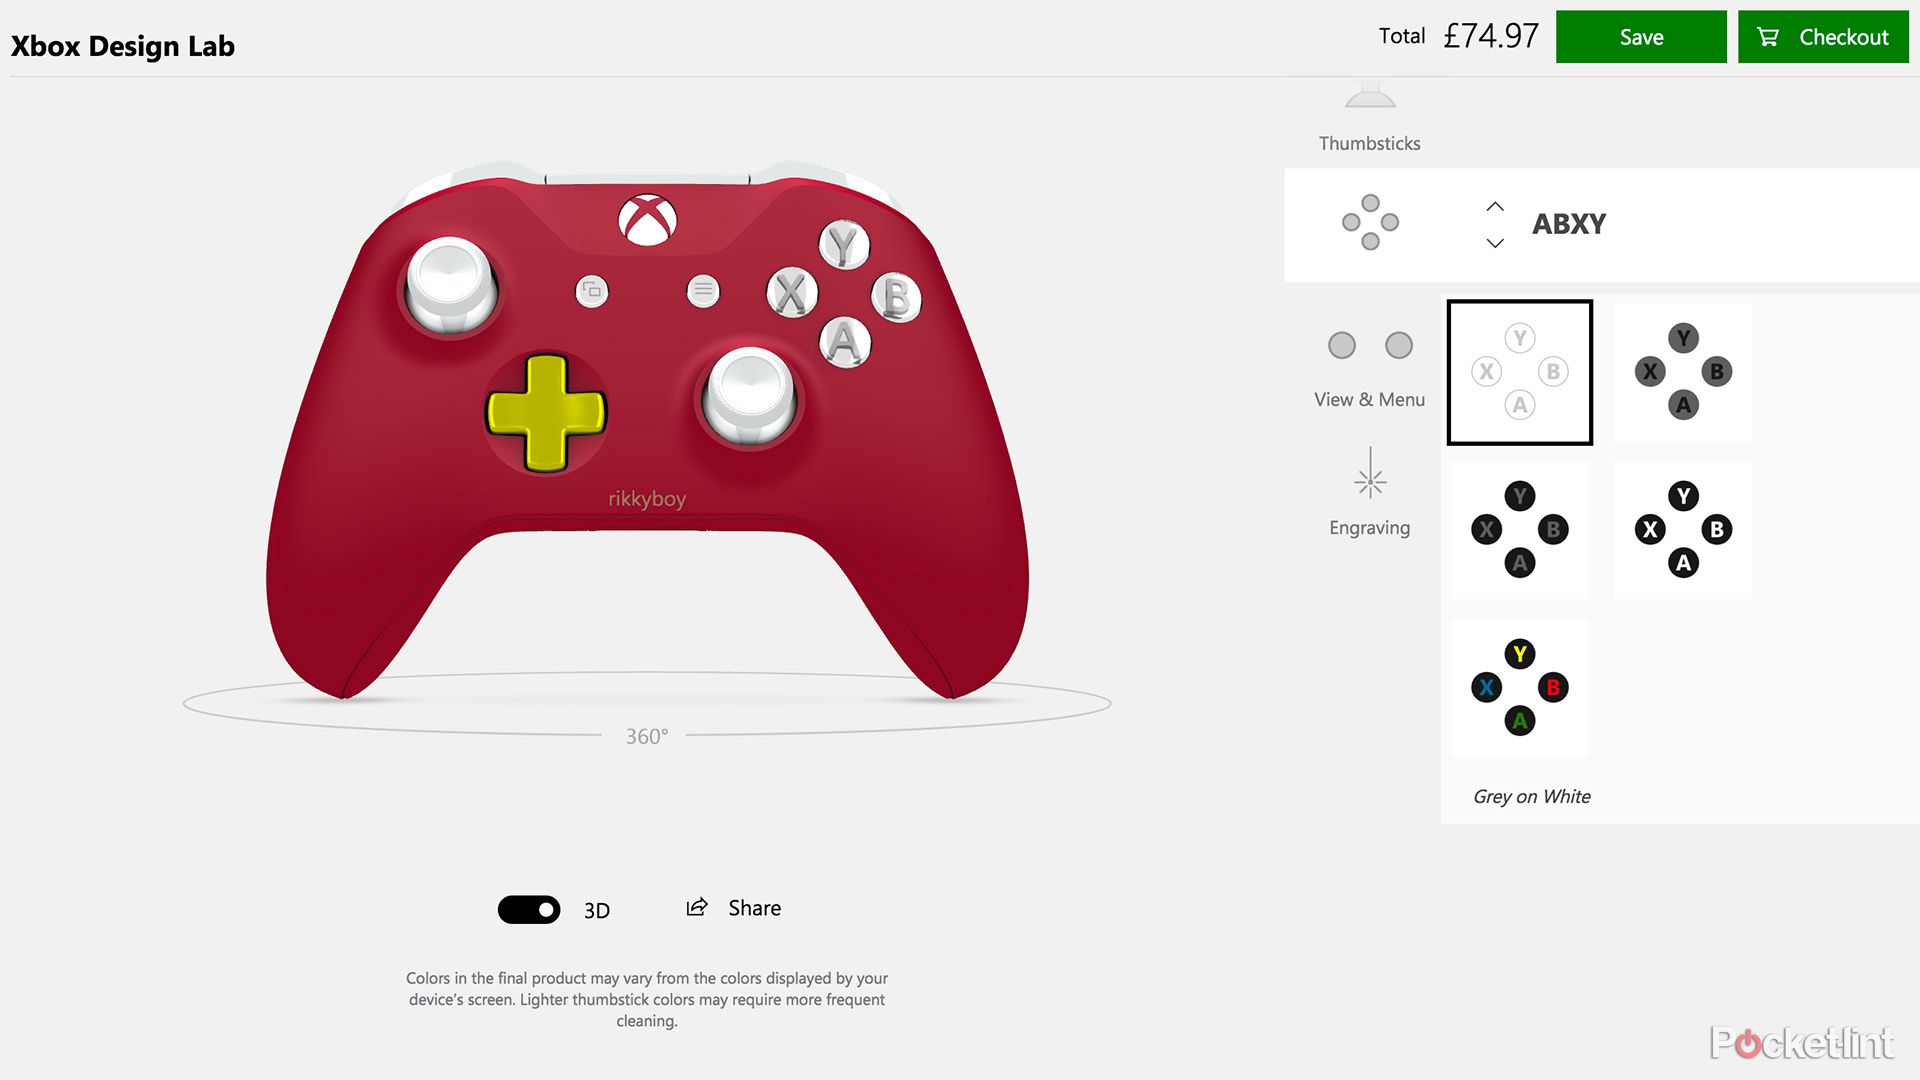 Xbox One Design Lab screens image 7